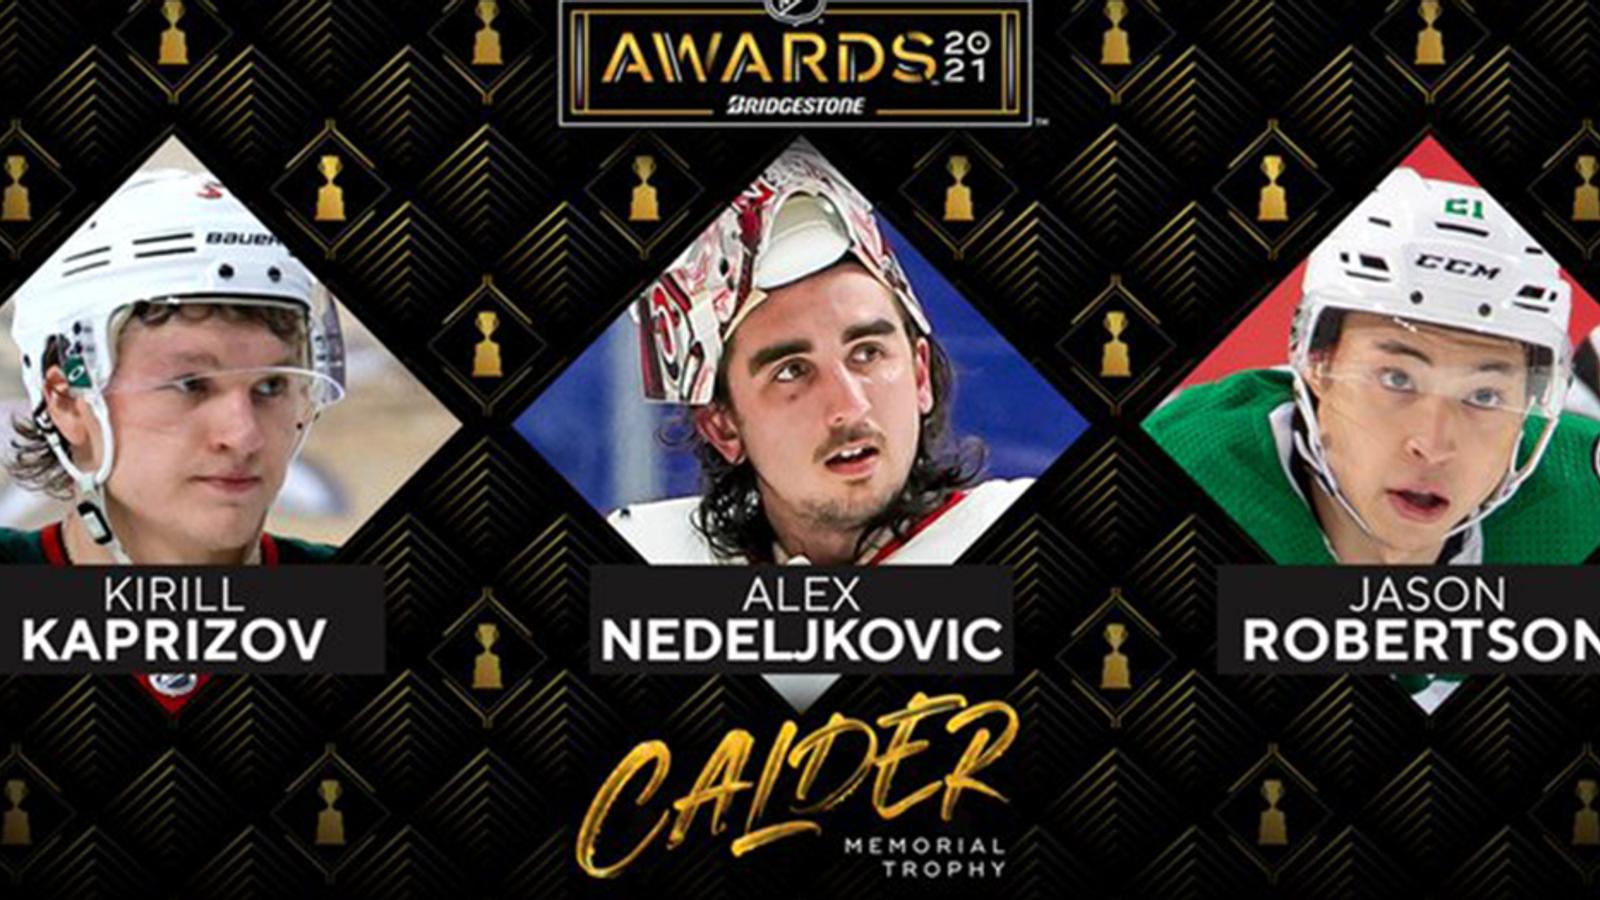 Kaprizov is the clear favorite after NHL announces Calder Trophy candidates 